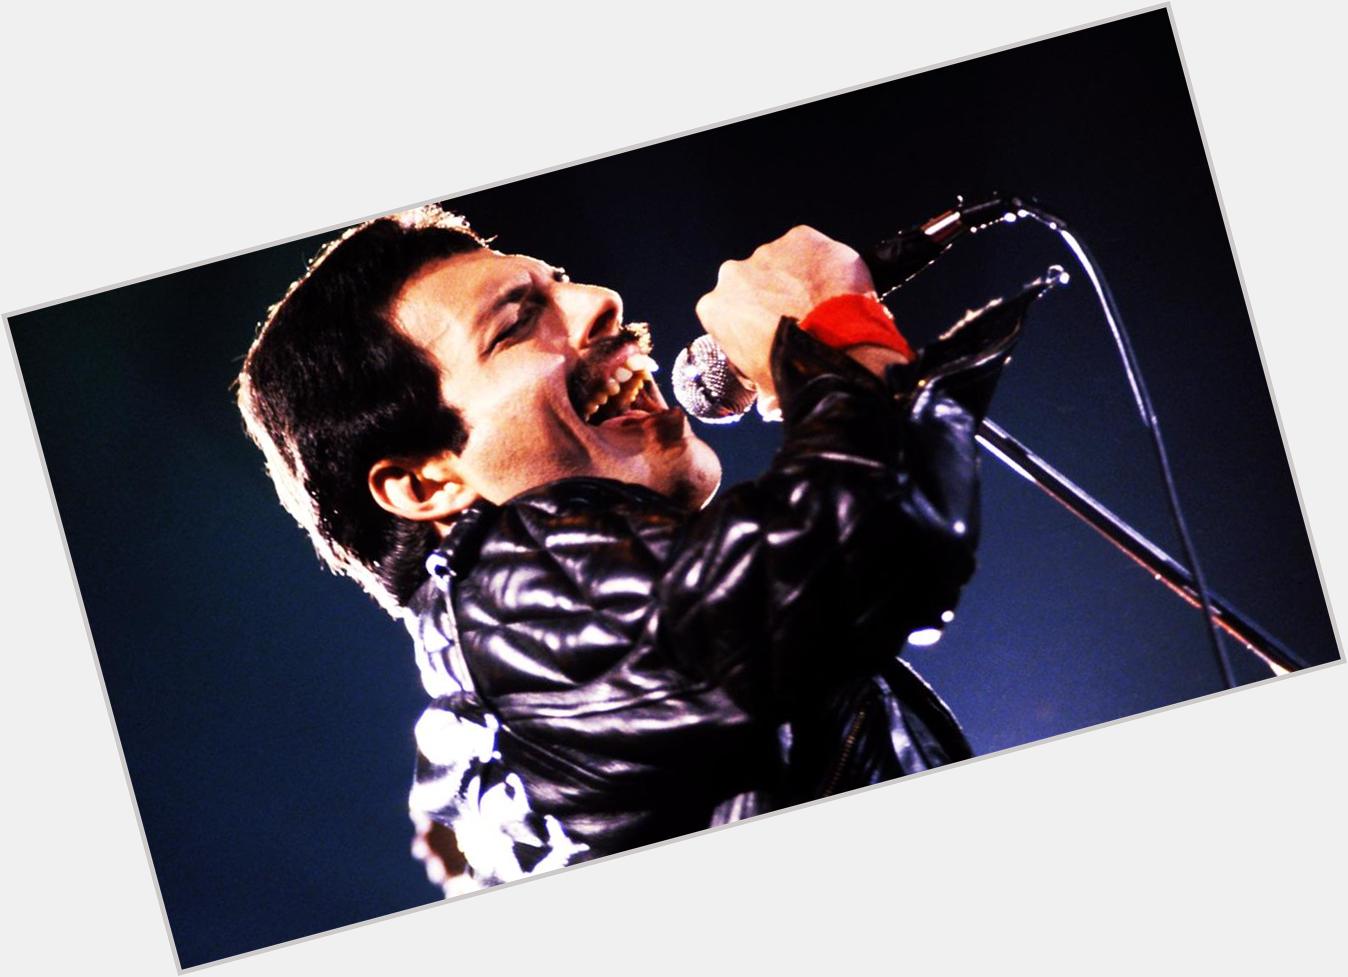 Happy birthday Freddie Mercury! We miss you. 